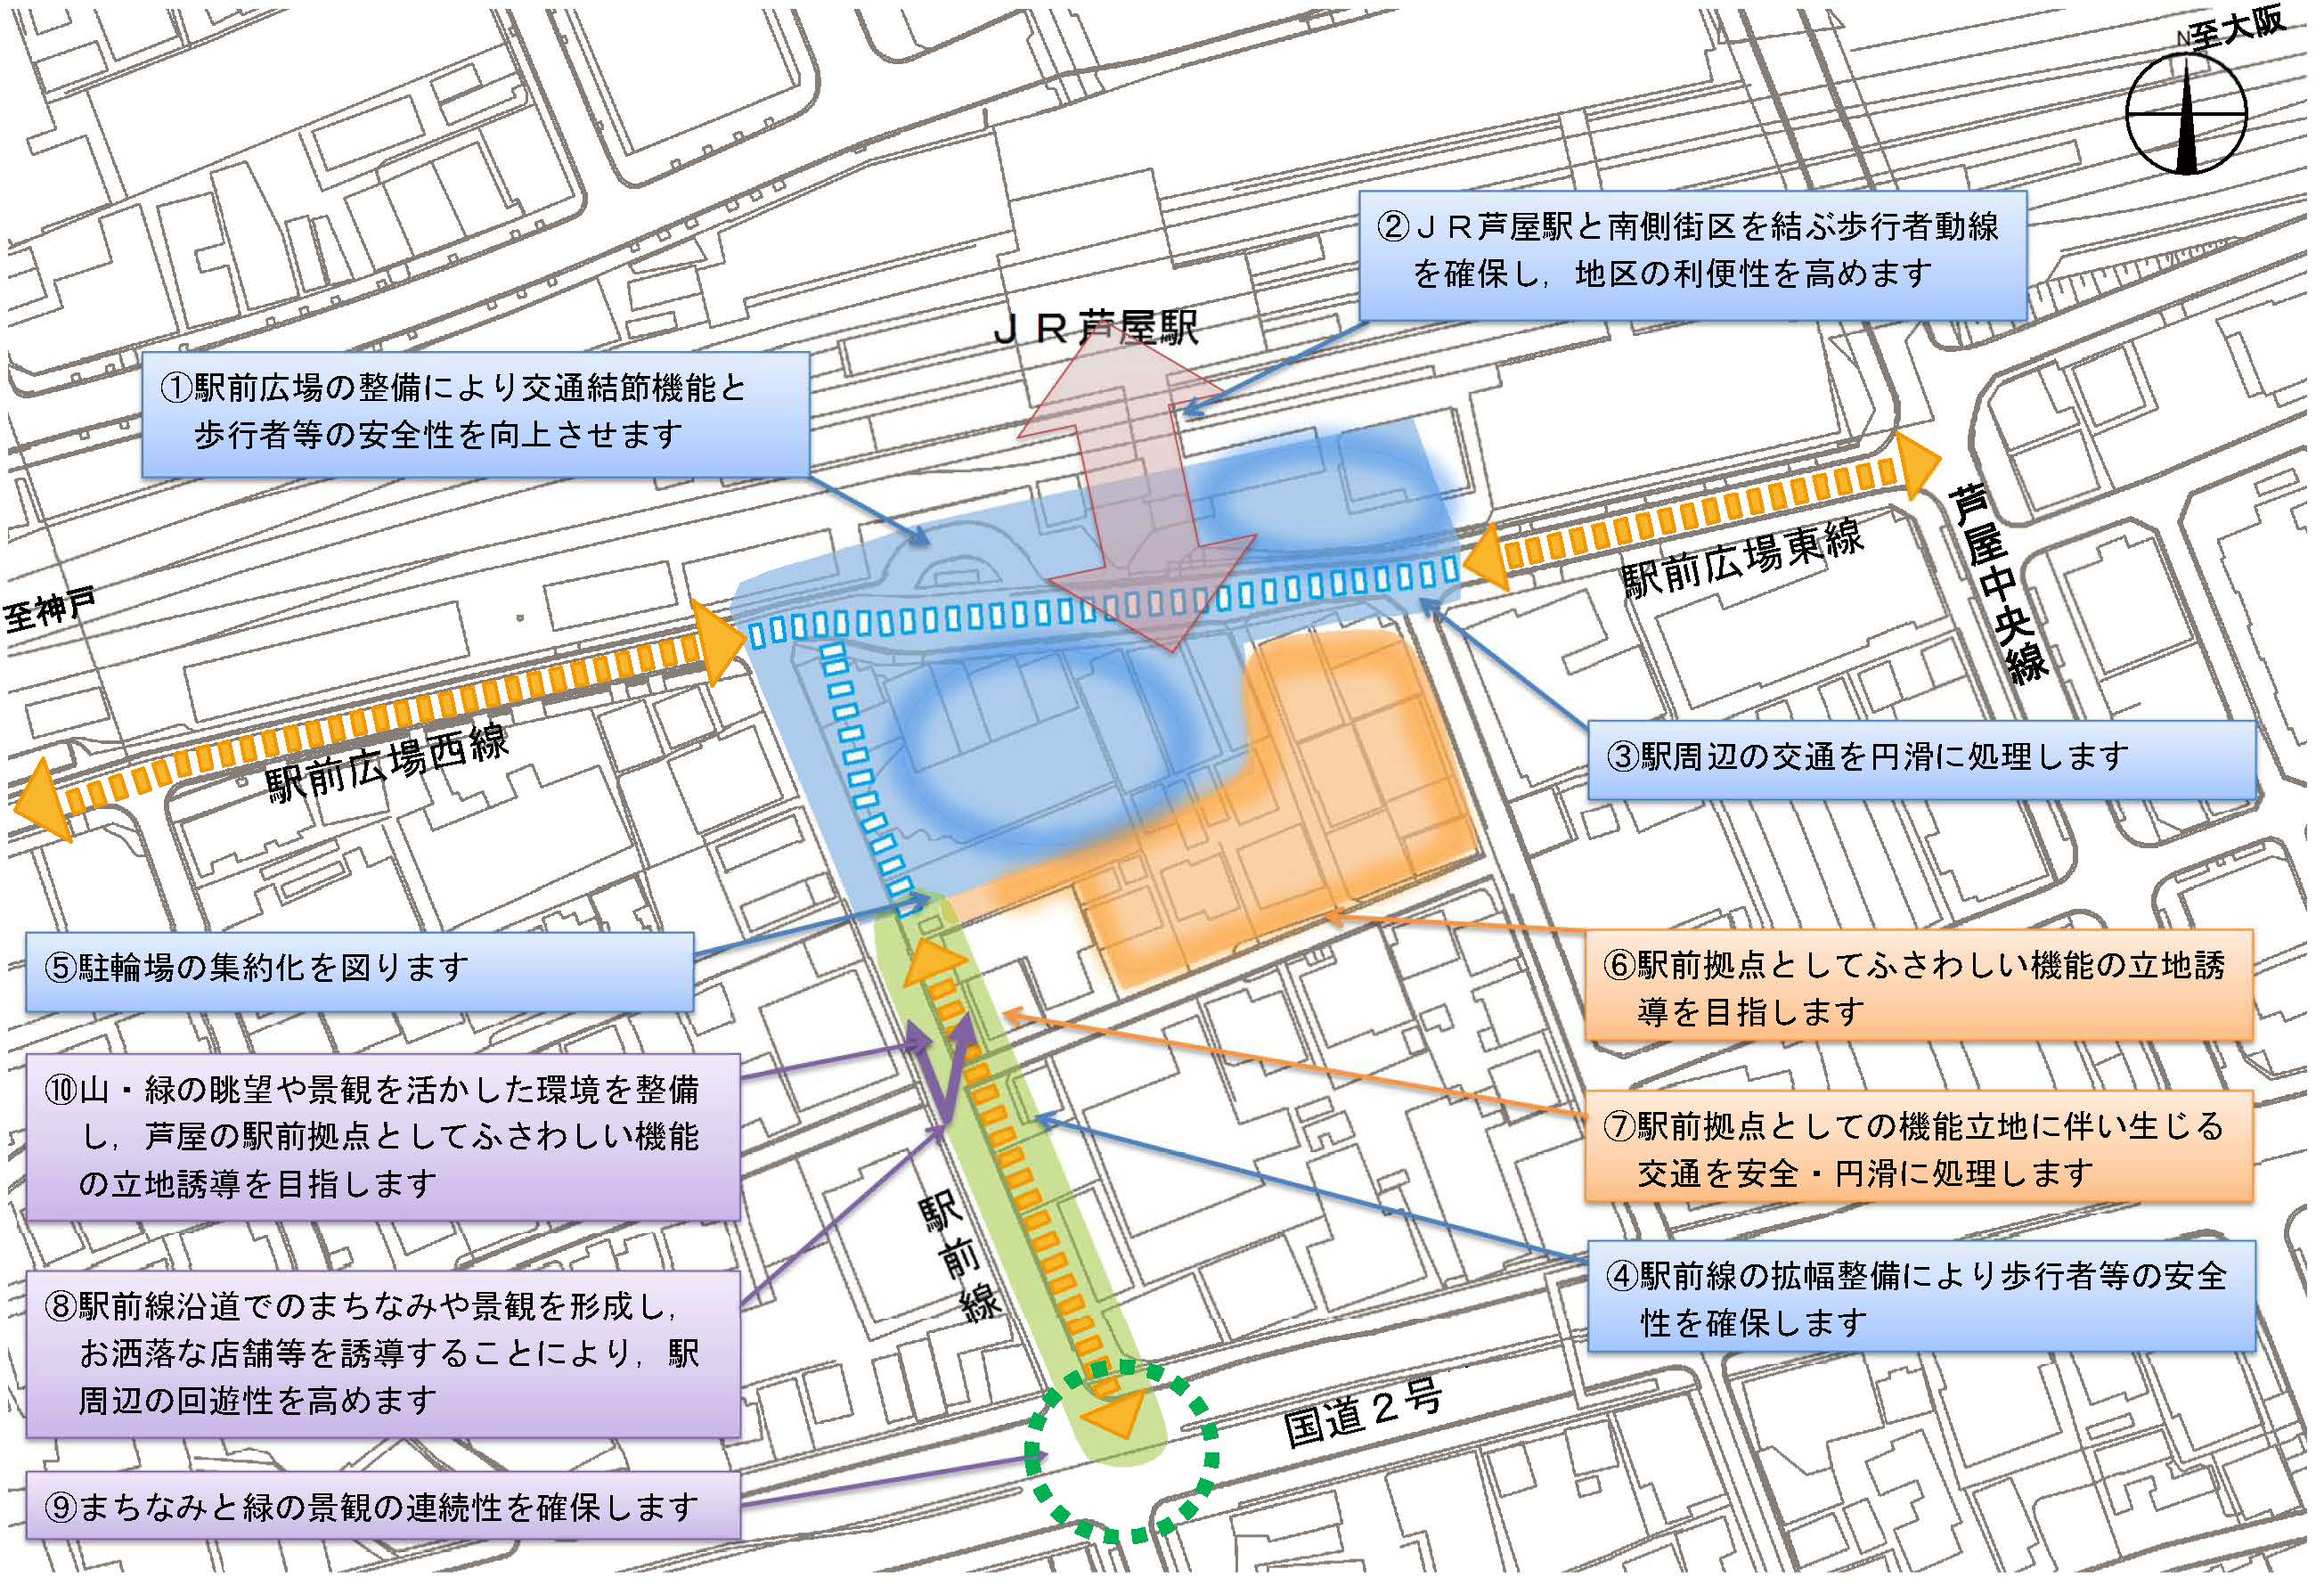 JR芦屋駅南地区の方針図